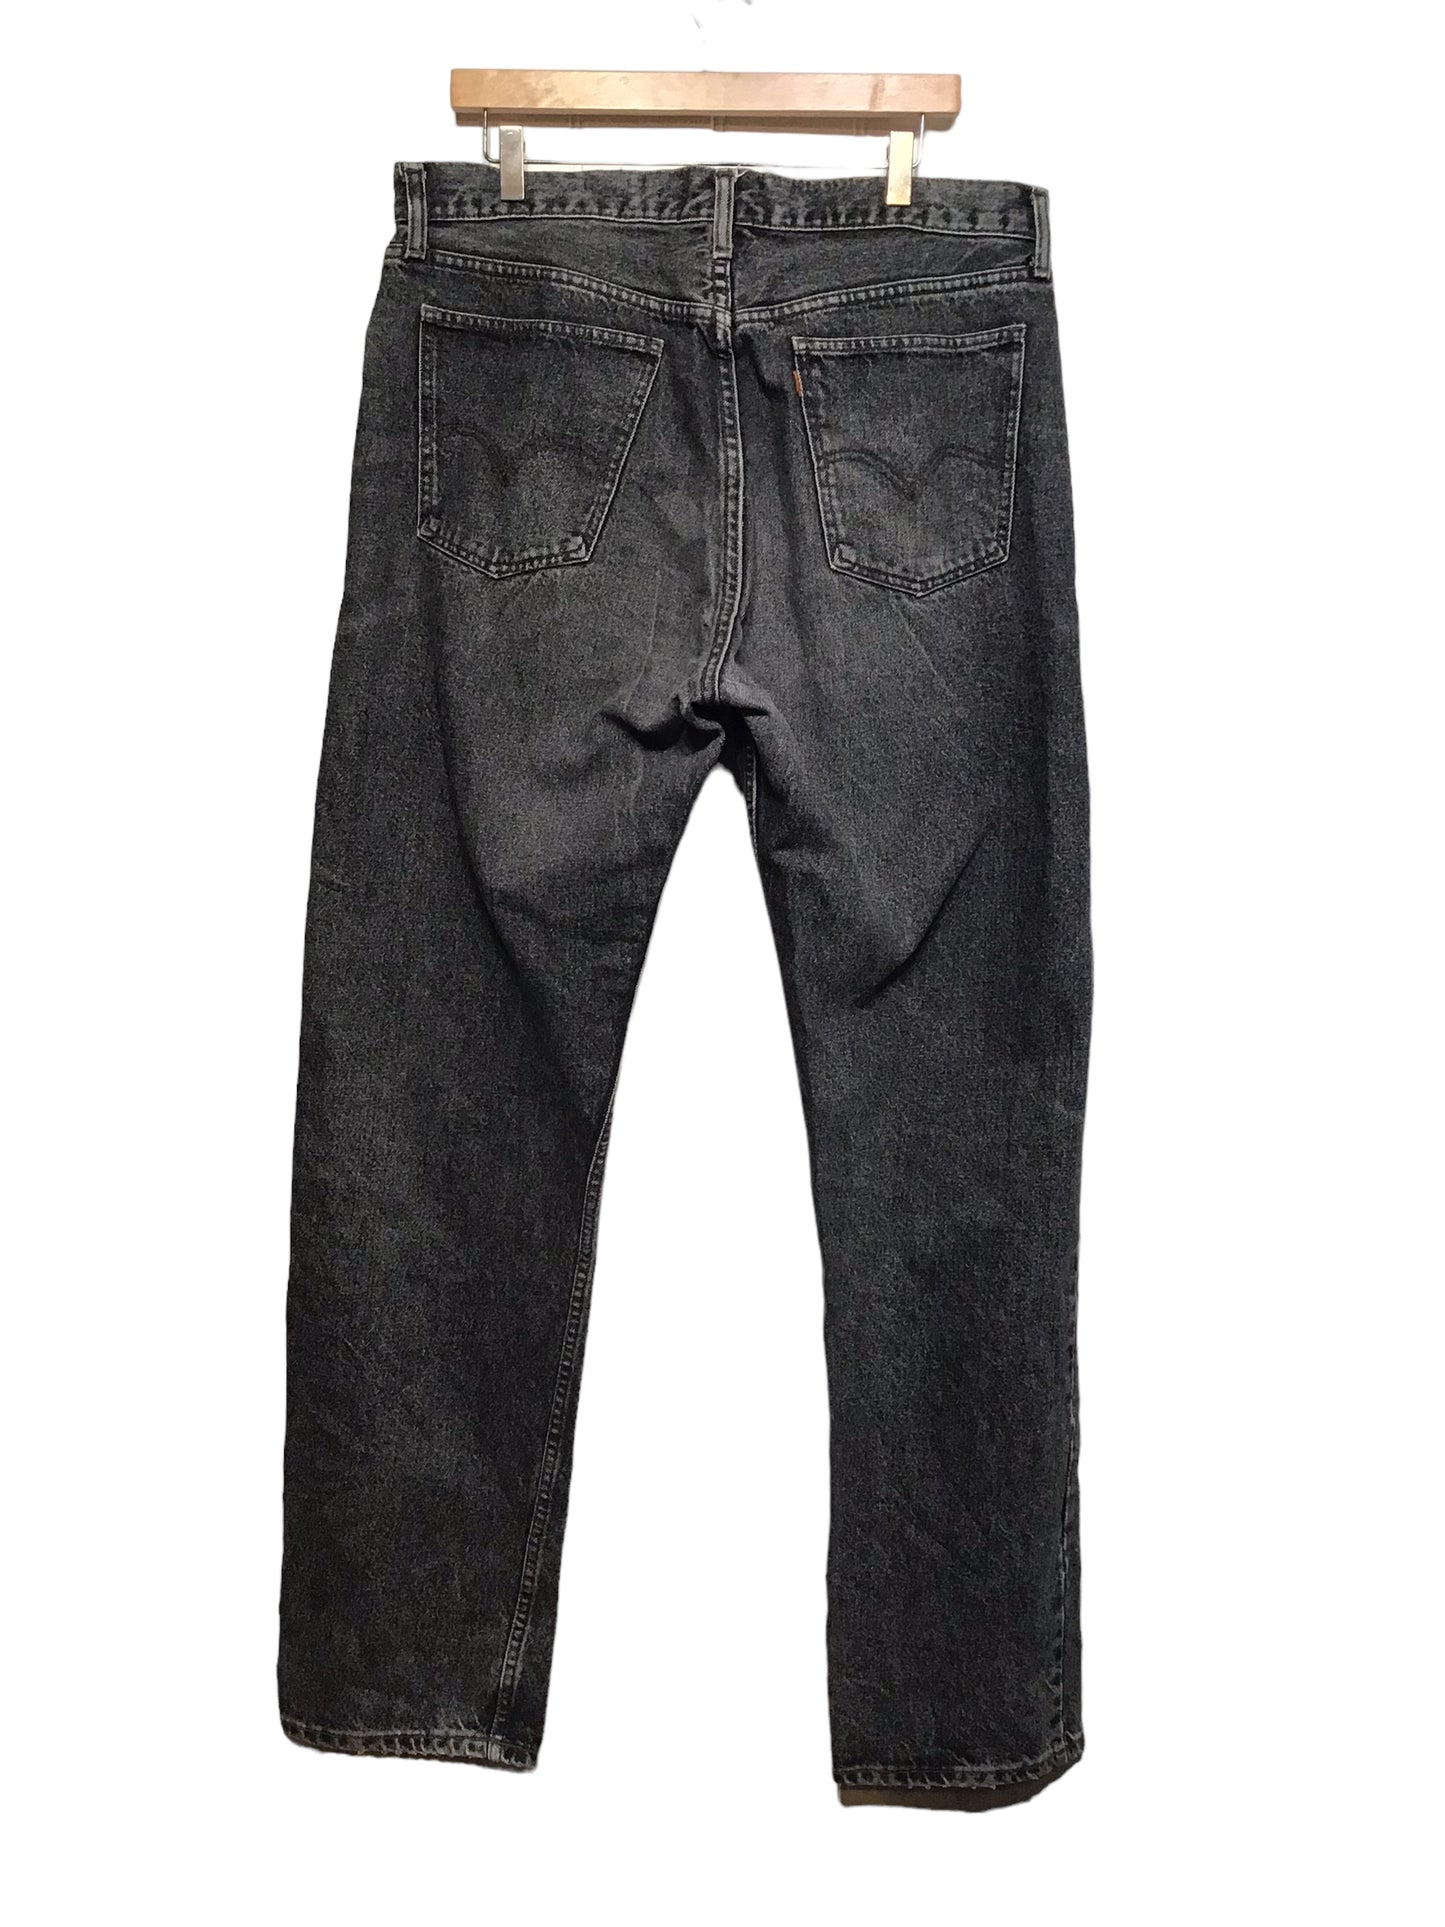 Levi’s Grey Jeans (38x34)